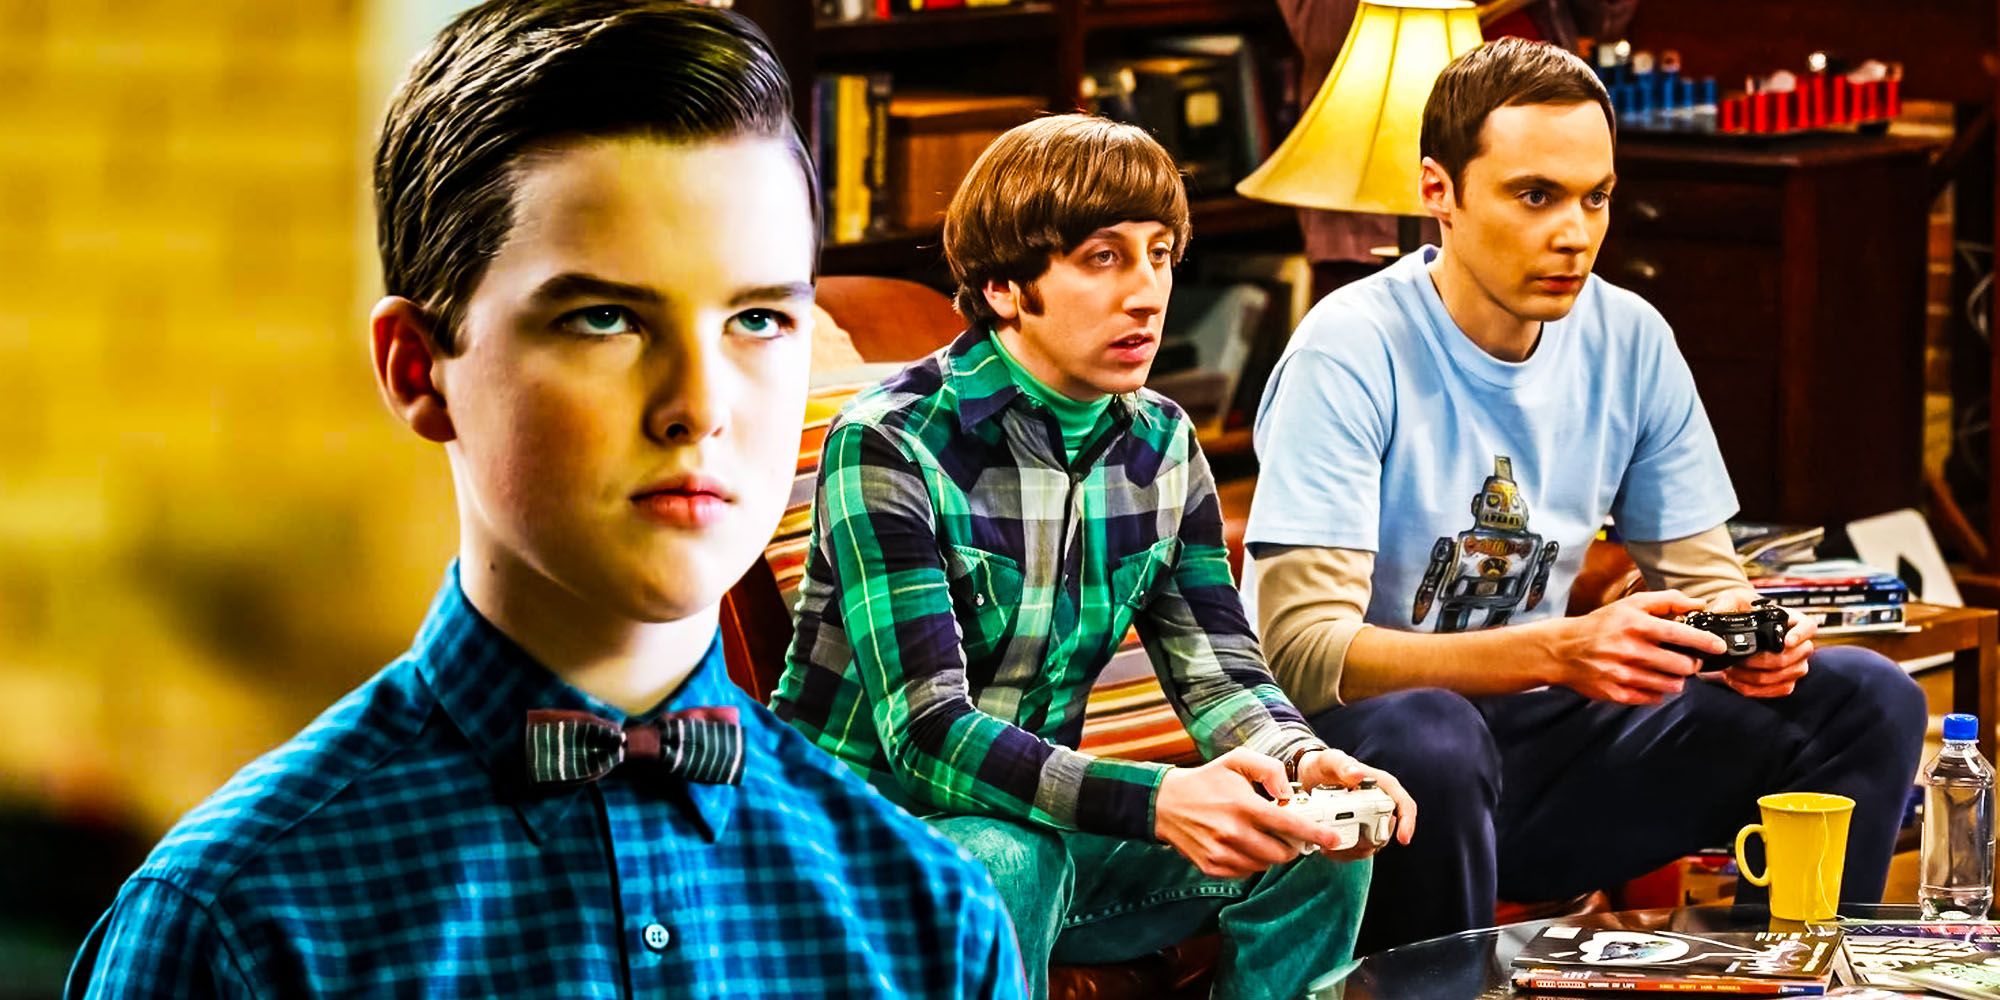 Why Young Sheldon’s Big Bang Theory Howard Cameo Was Disappointing